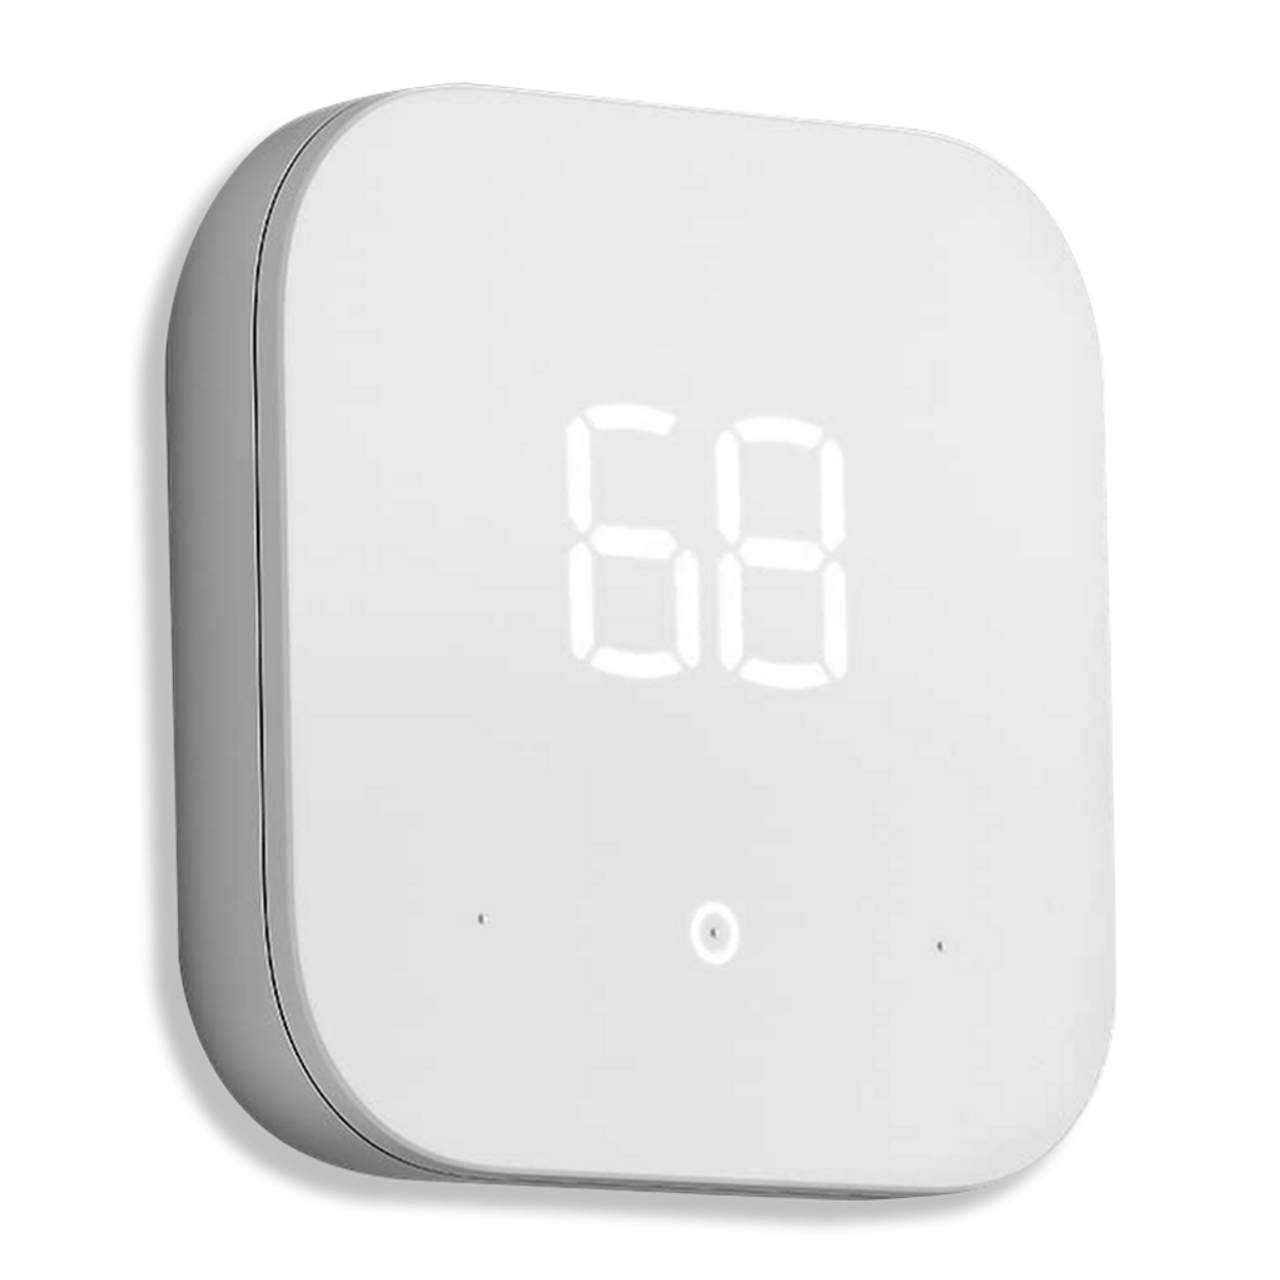 amazon smart thermostat